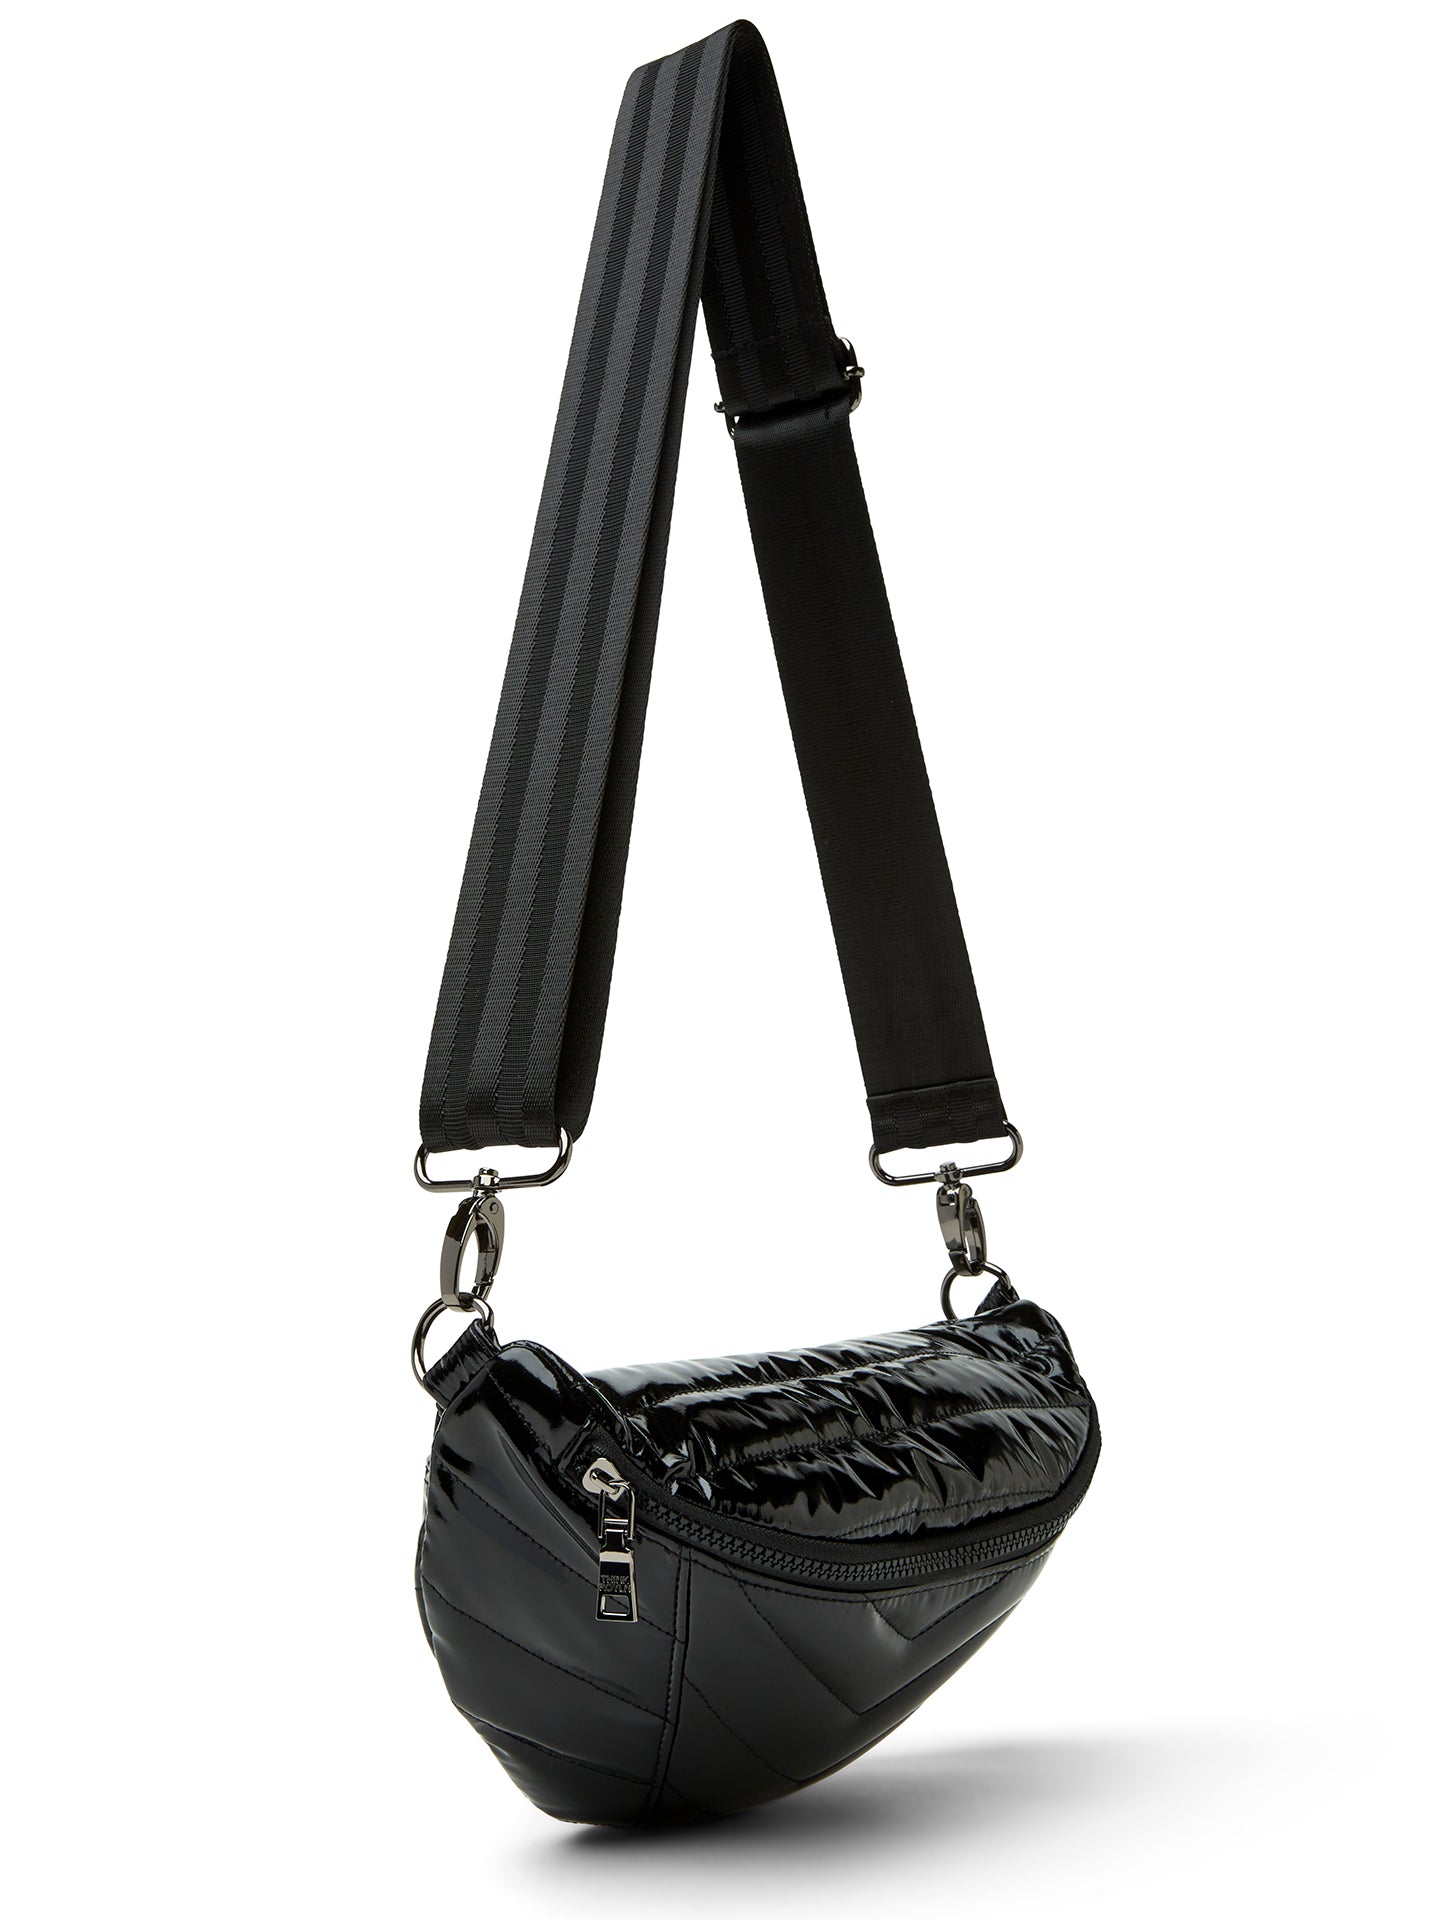 Fendi Runaway Bag Ice Gray Leather W Black Trim Palladium Metal Hardware  Satchel Tote Handbag 8bh344